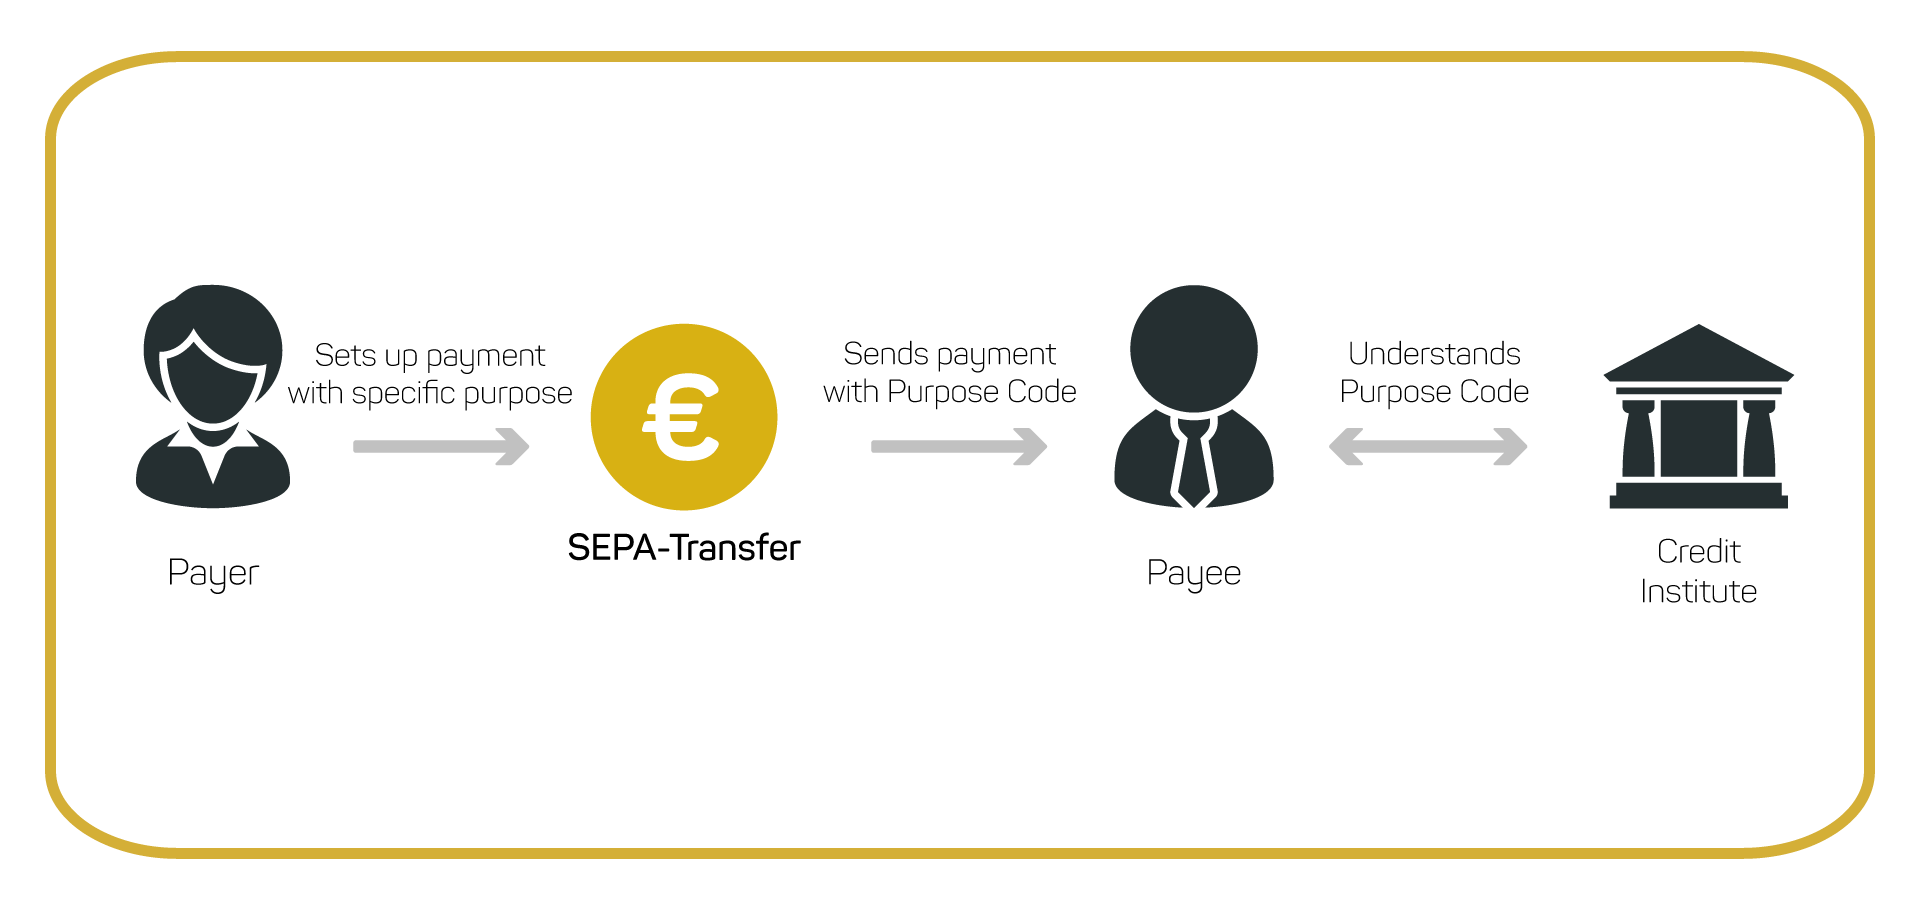 SEPA-Transfer Purpose Code explained